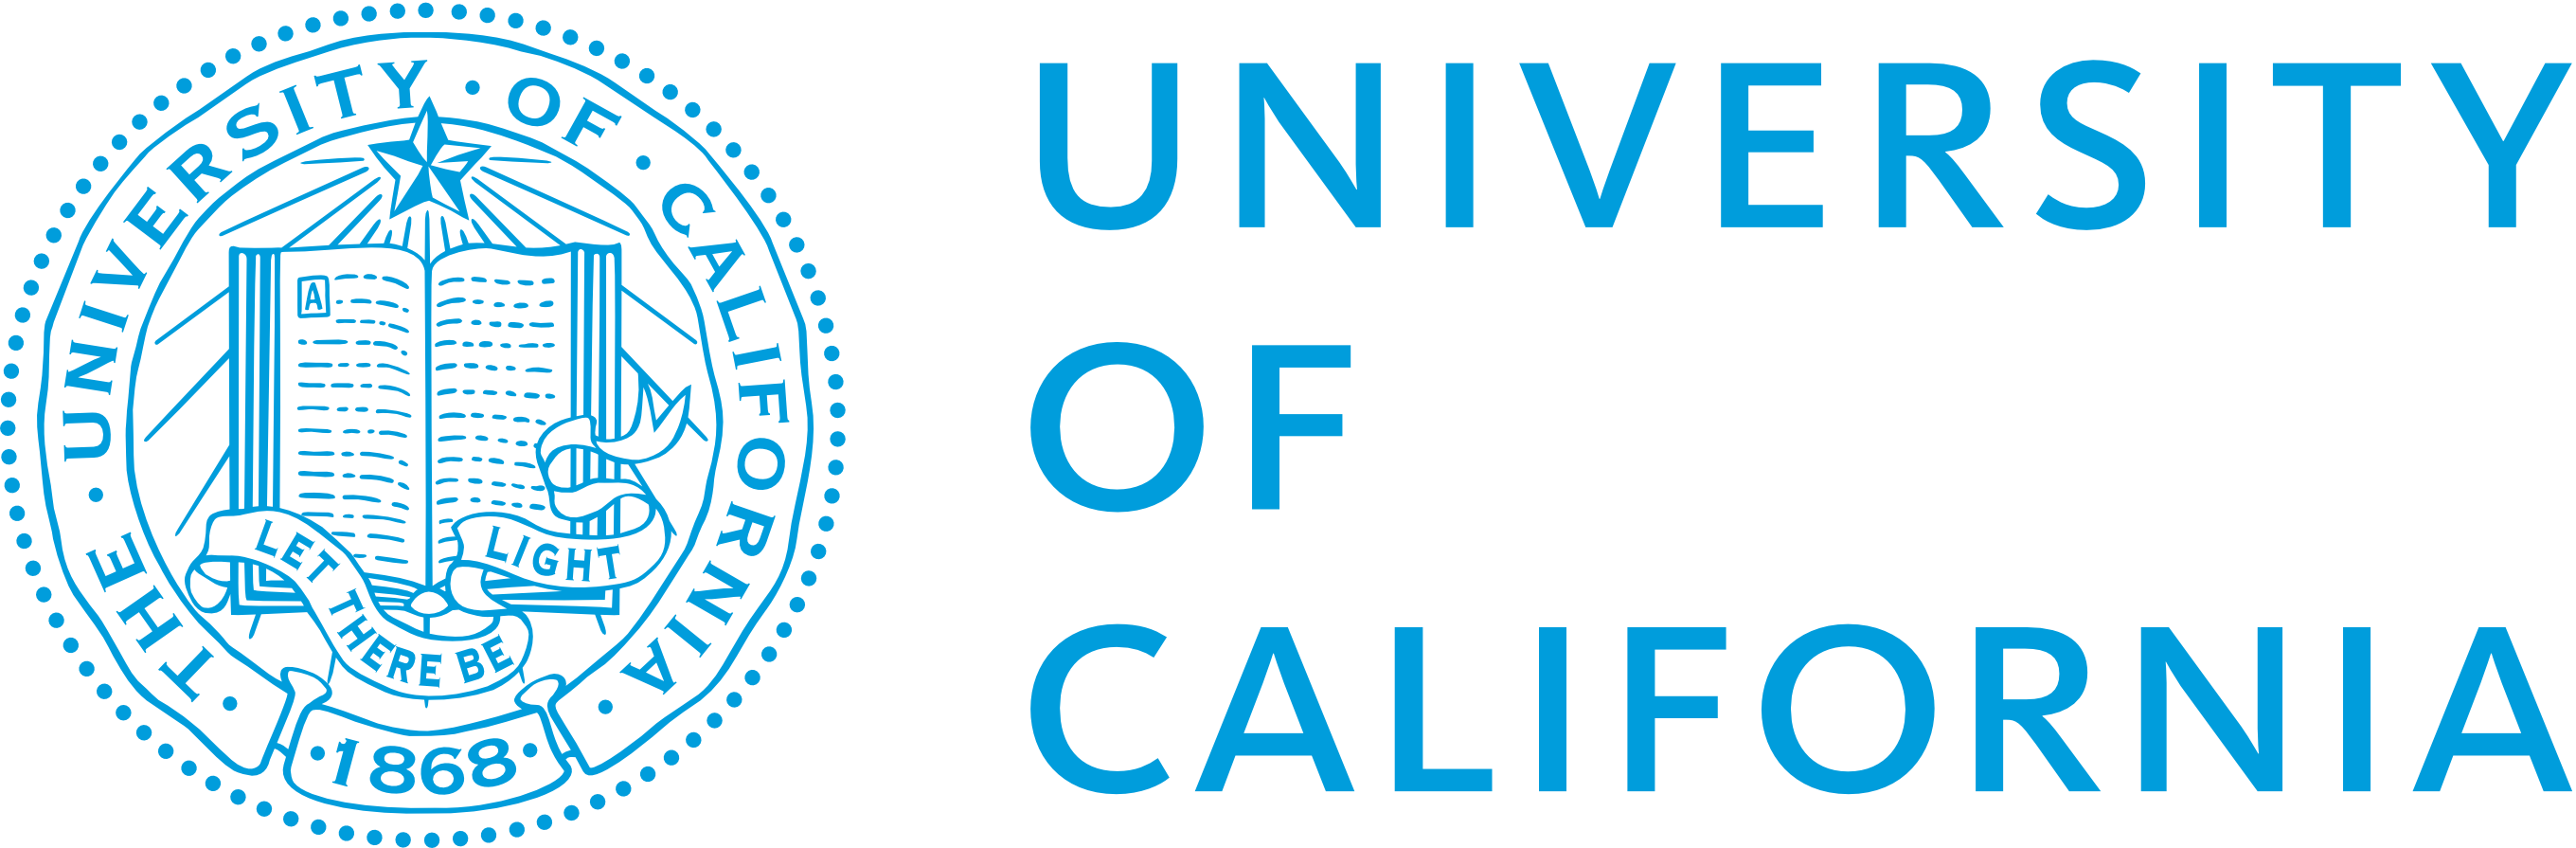 universtiy logo